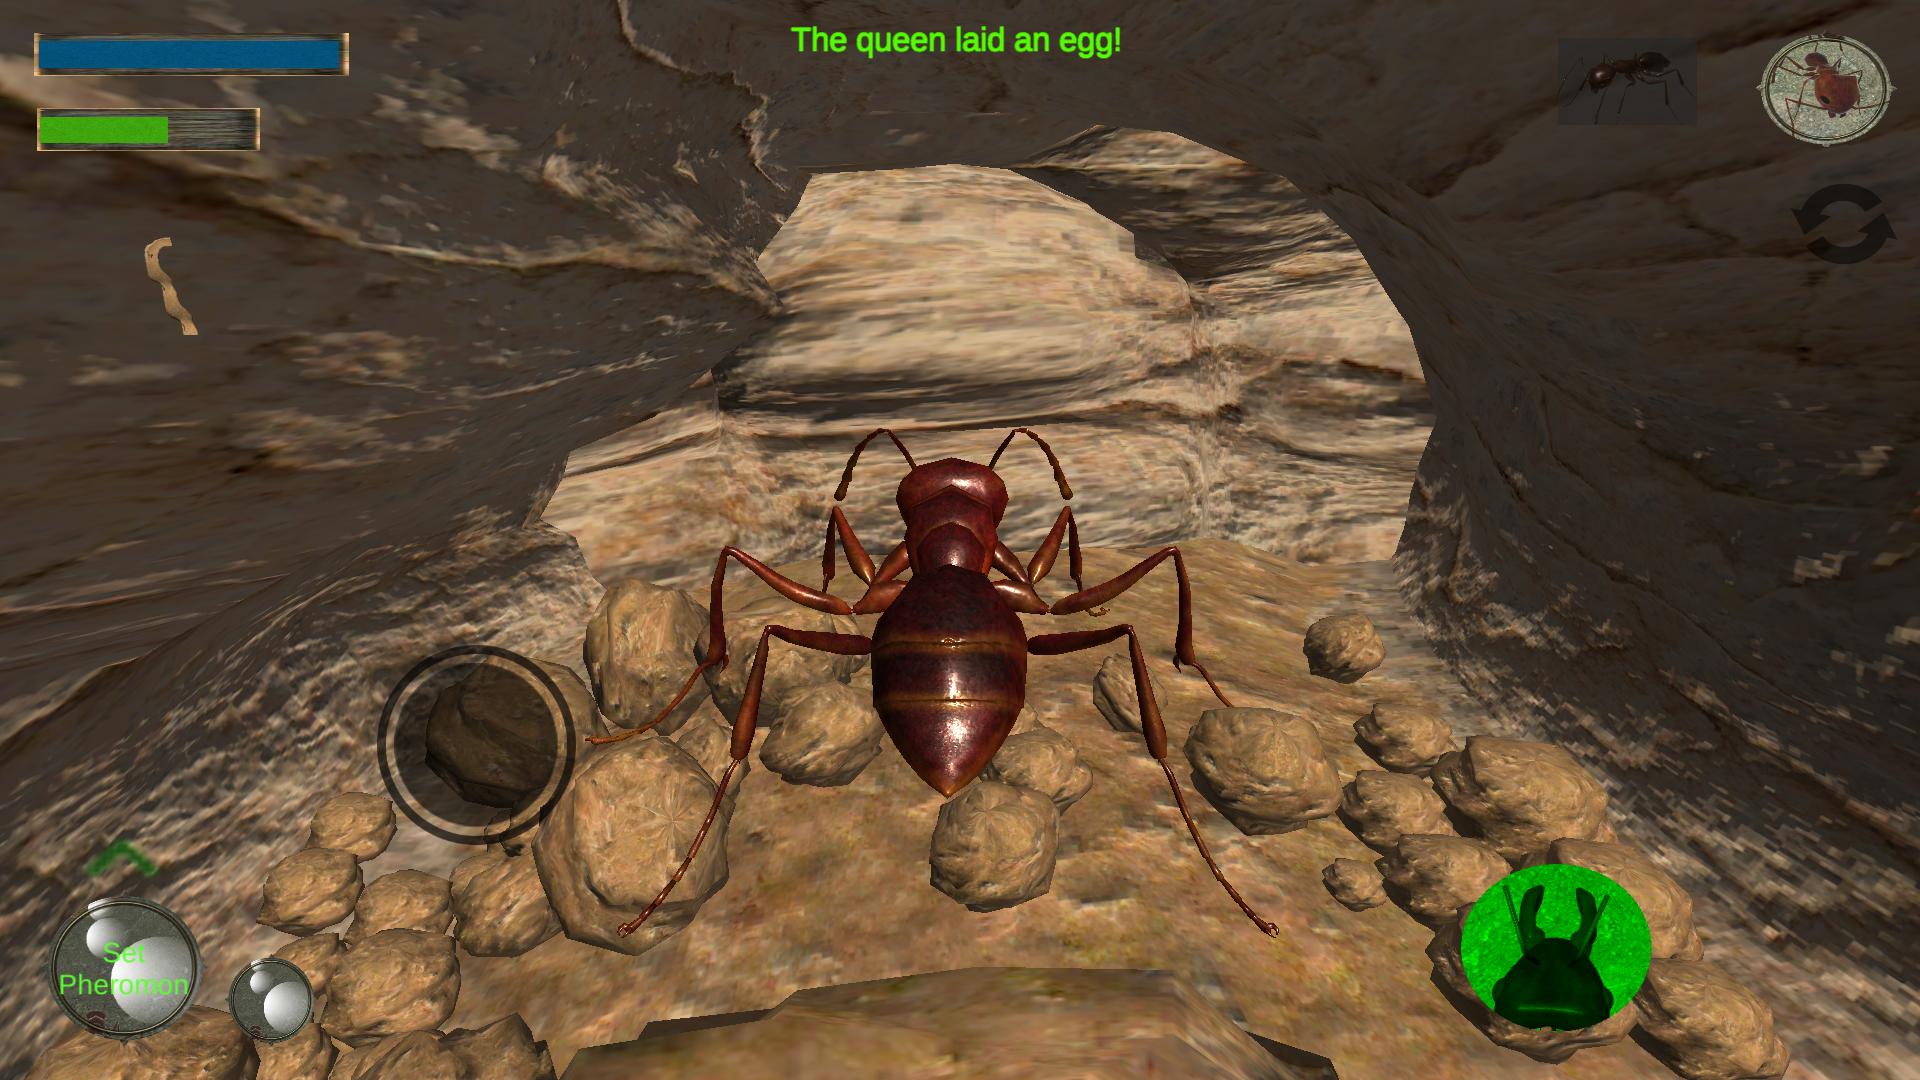 Игра симулятор муравья. Игра Ant Queen 3d. Игра про муравьев Ants. Симулятор муравья (Муравейник). Симулятор муравья 3d.